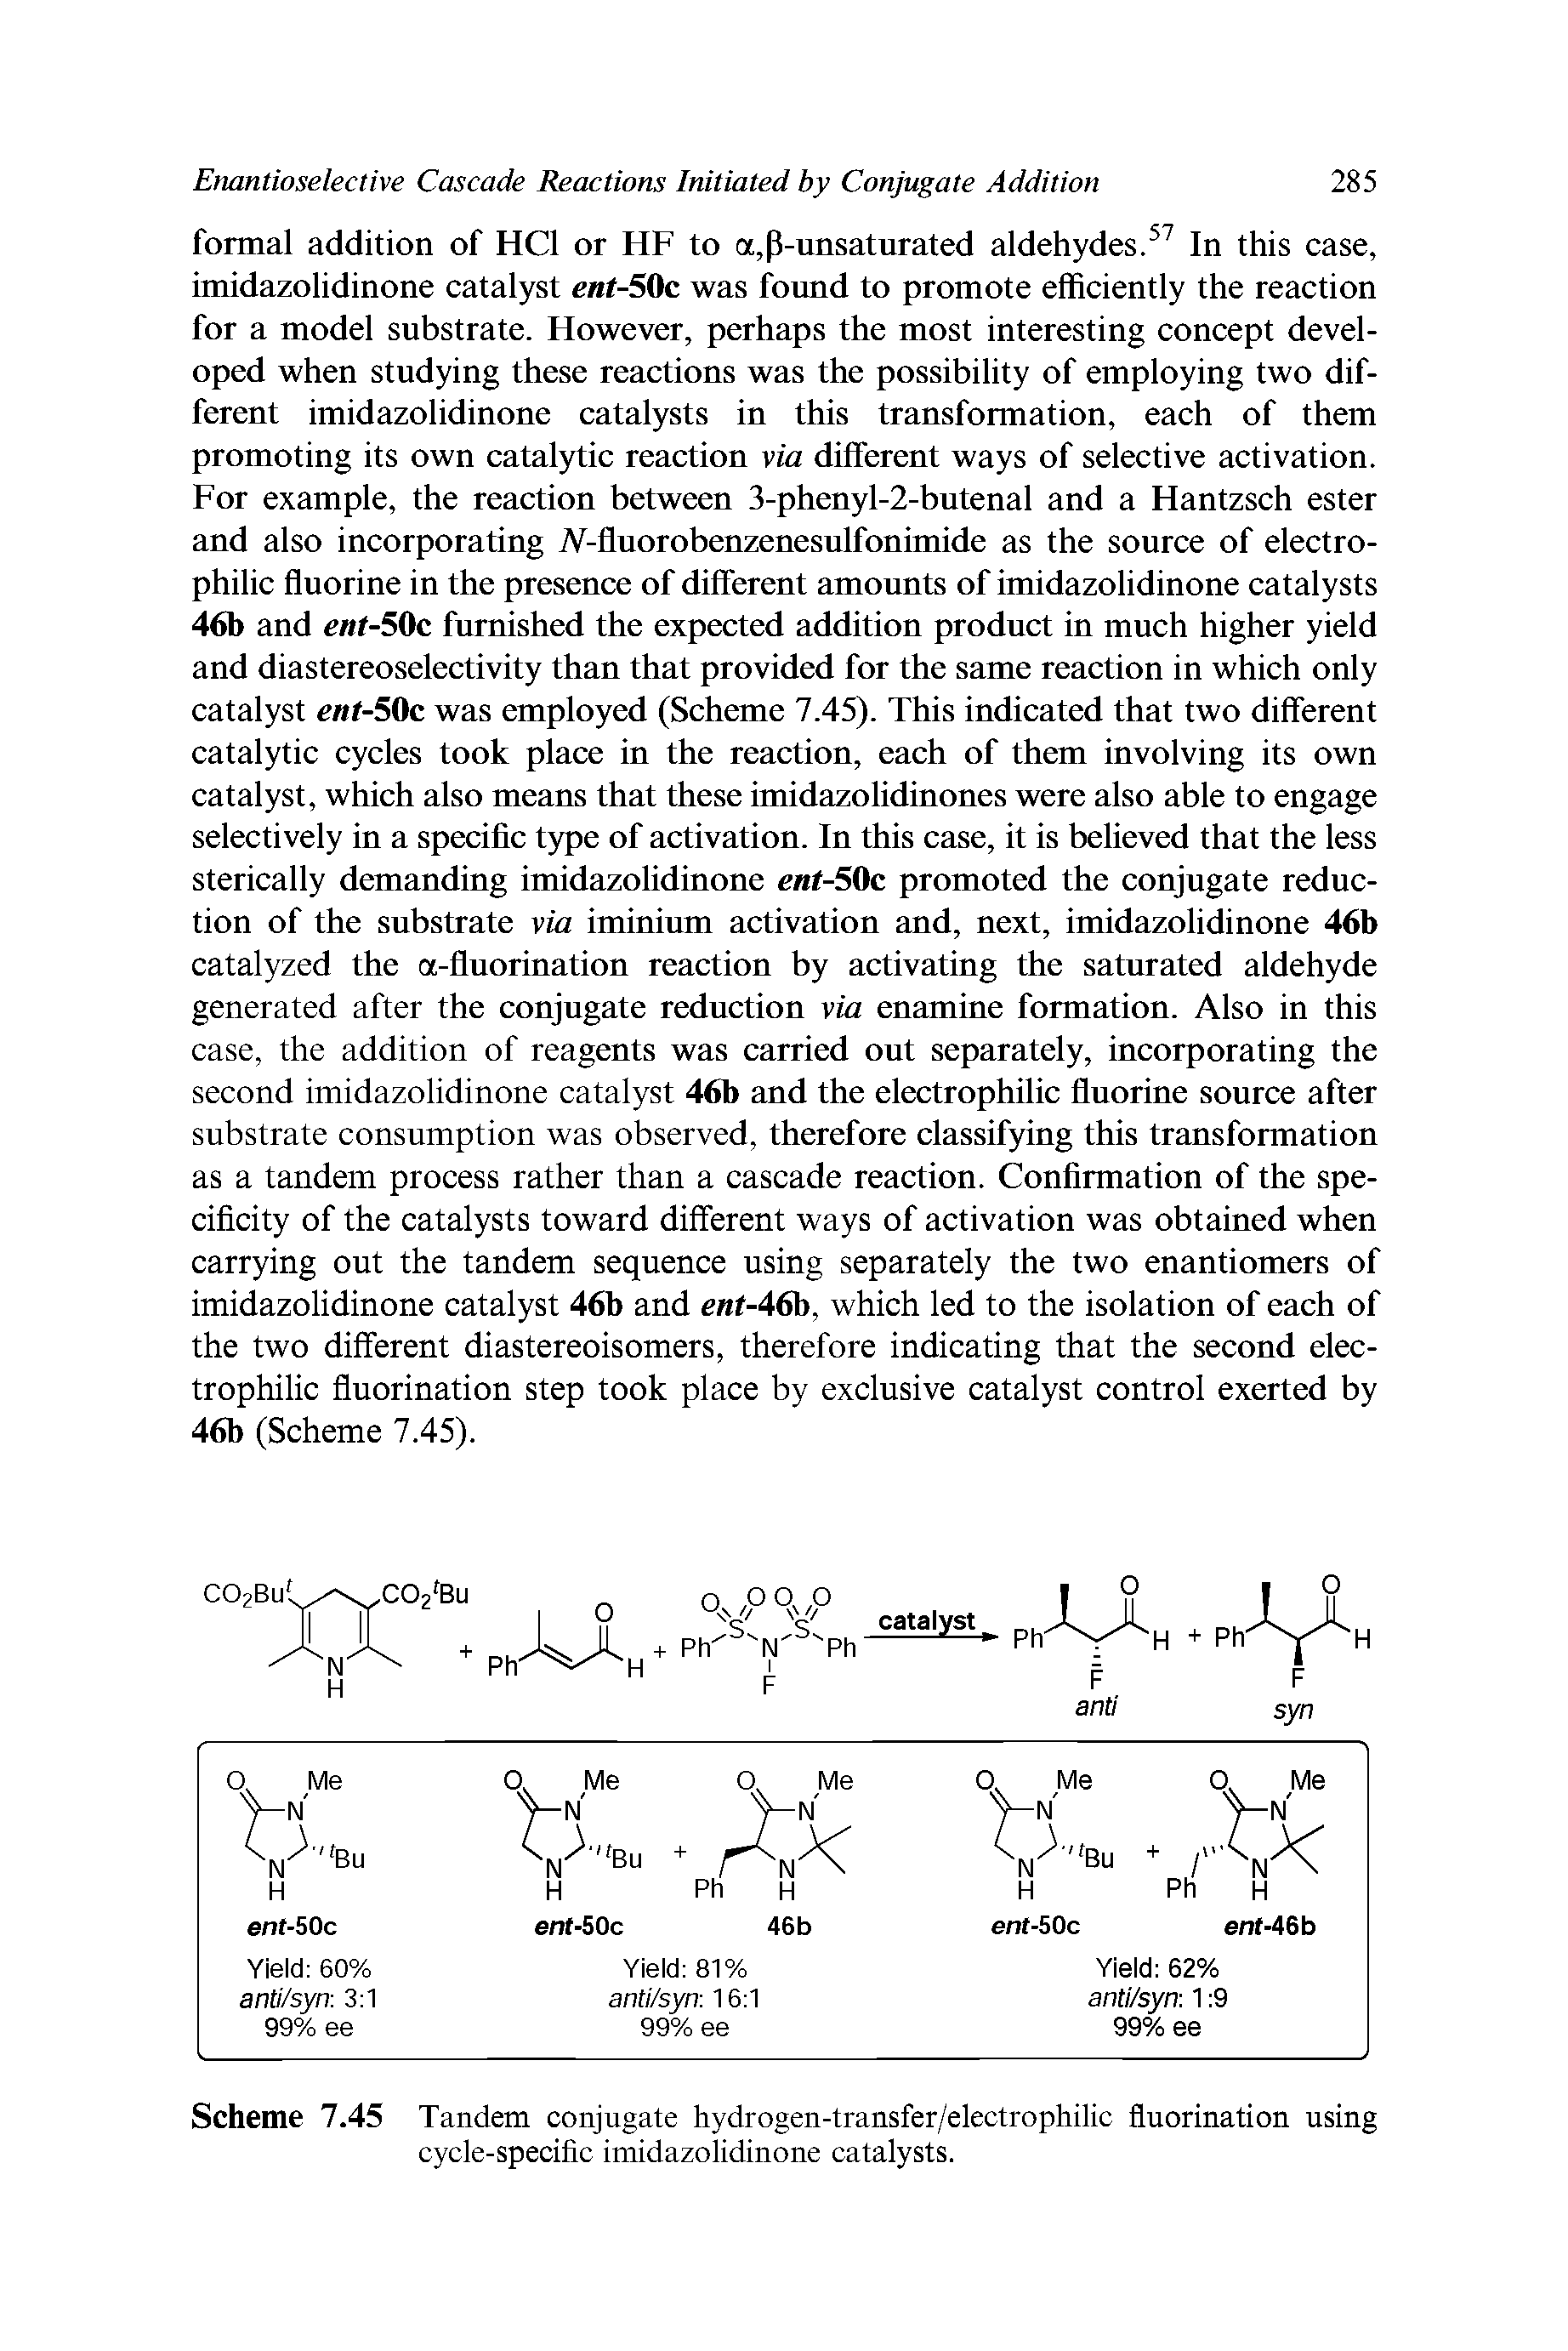 Scheme 7.45 Tandem conjugate hydrogen-transfer/electrophilic fluorination using cycle-specific imidazolidinone catalysts.